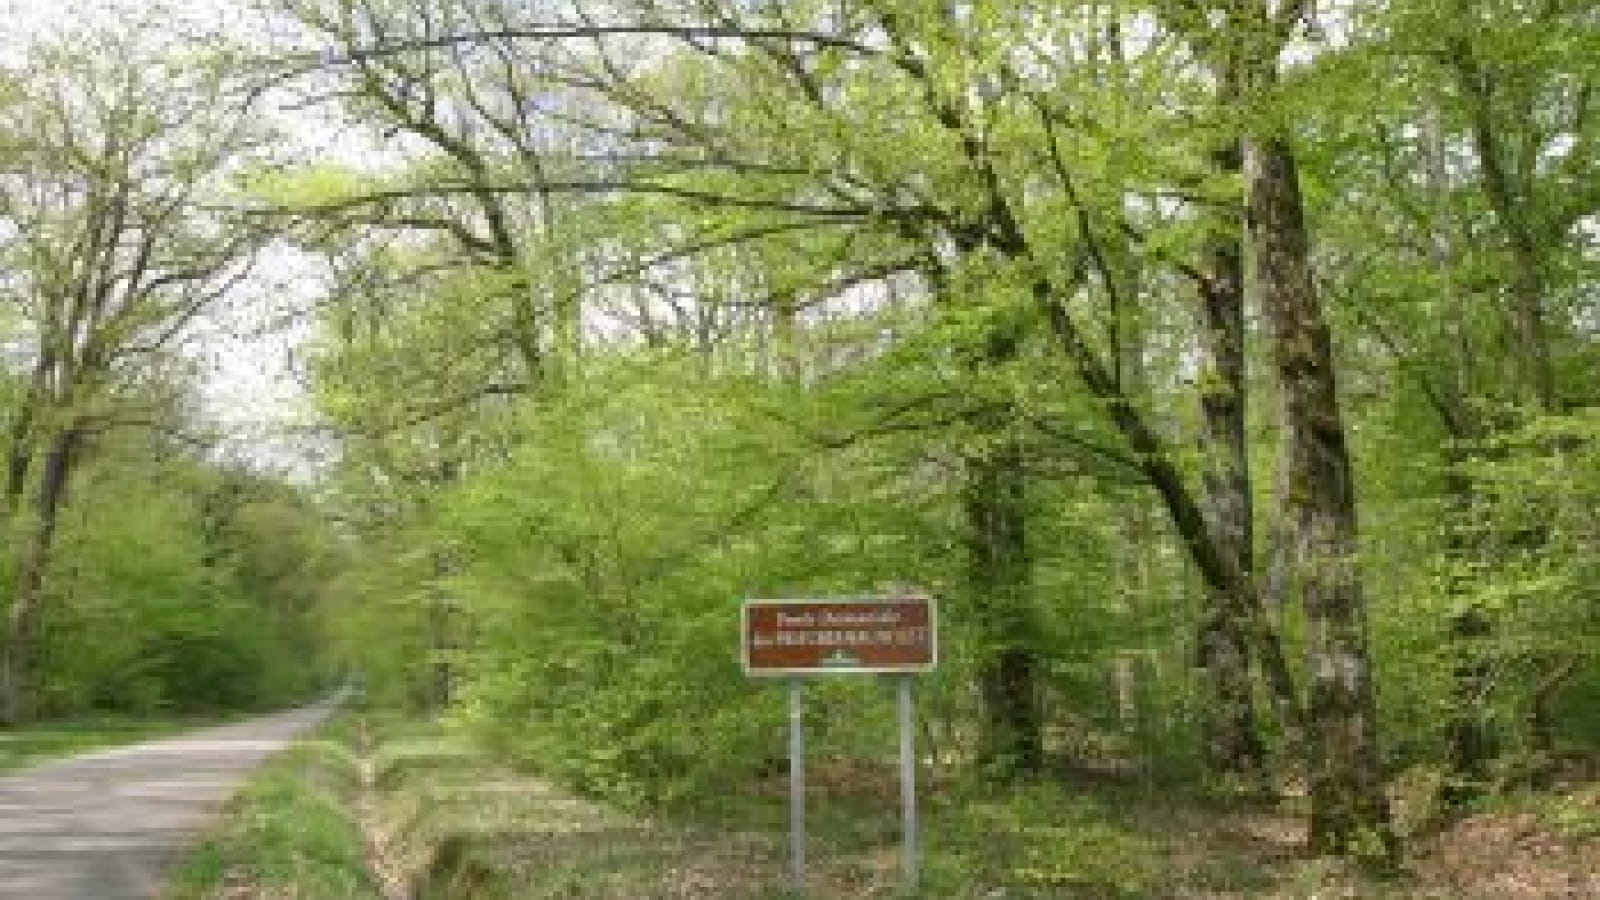 Circuit 'La promenade de l'hermite de la forêt'